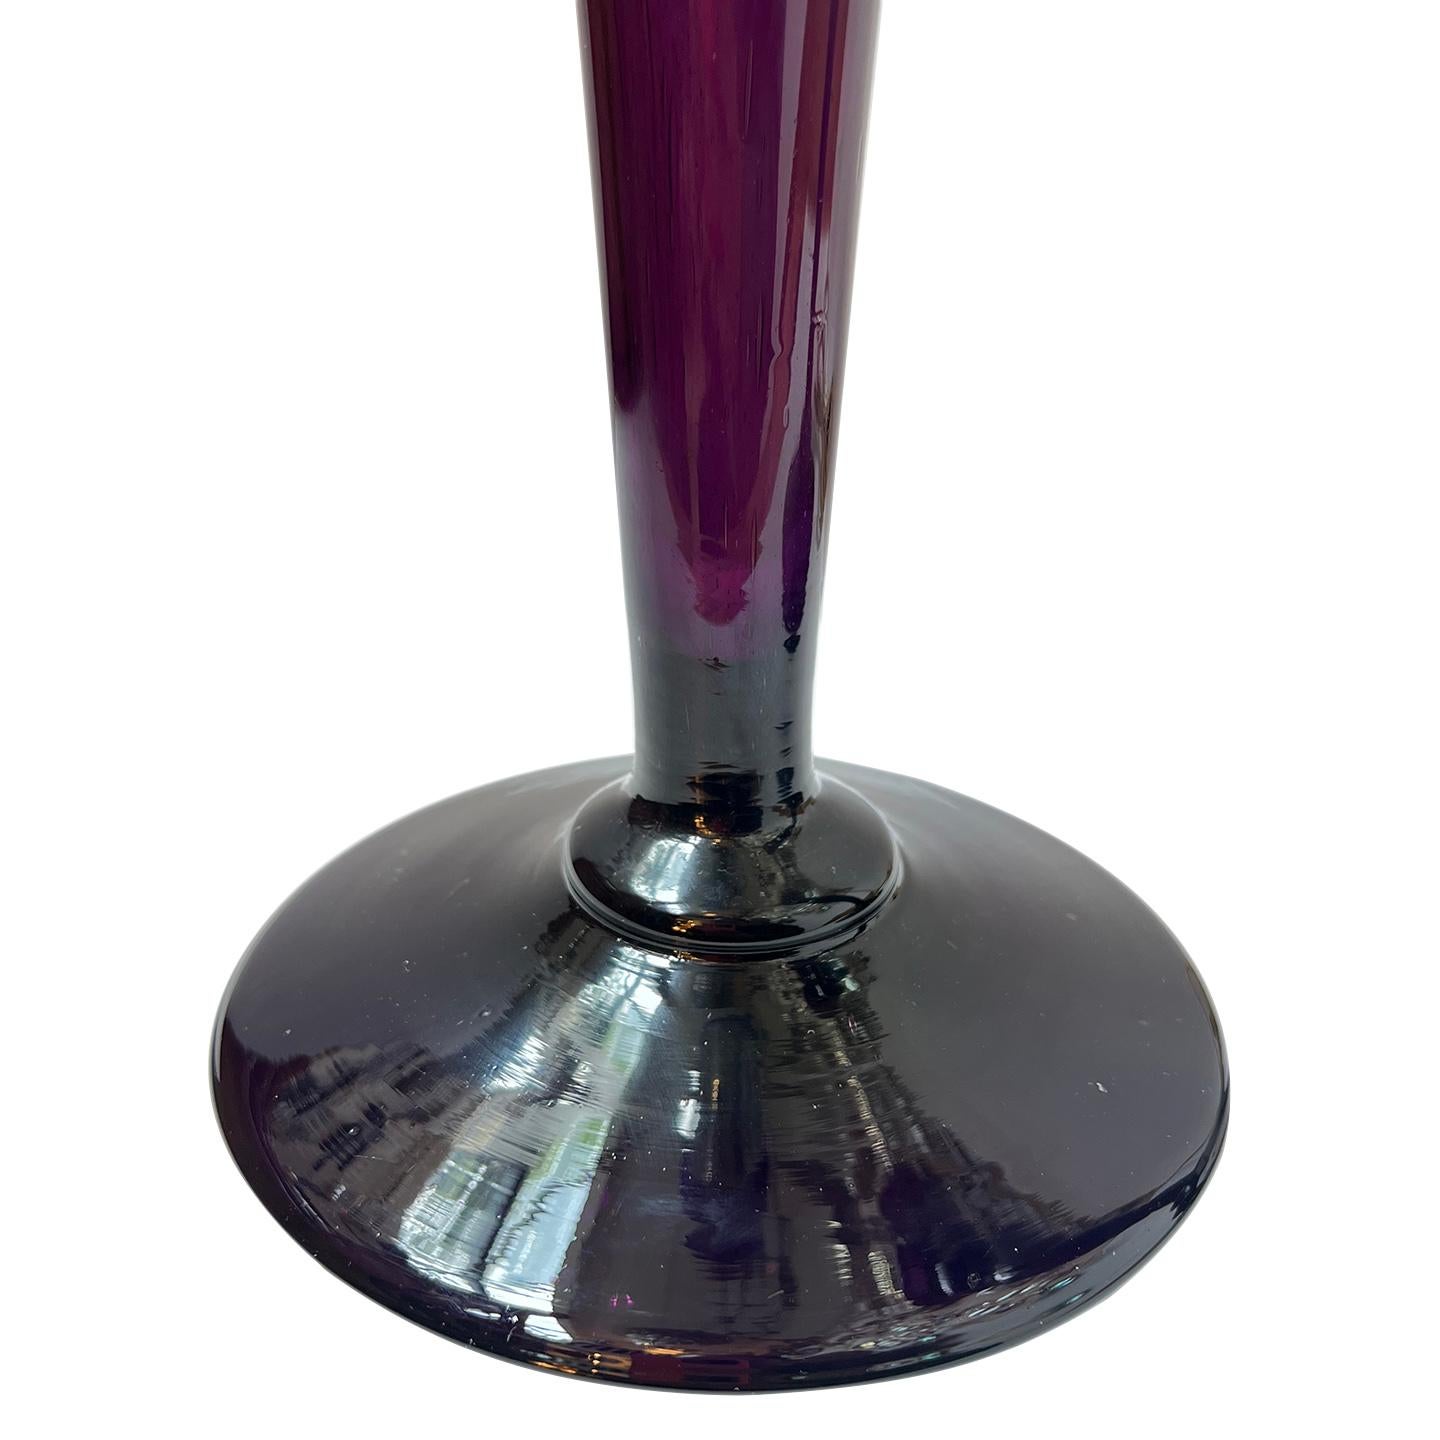 glass candlestick lamp